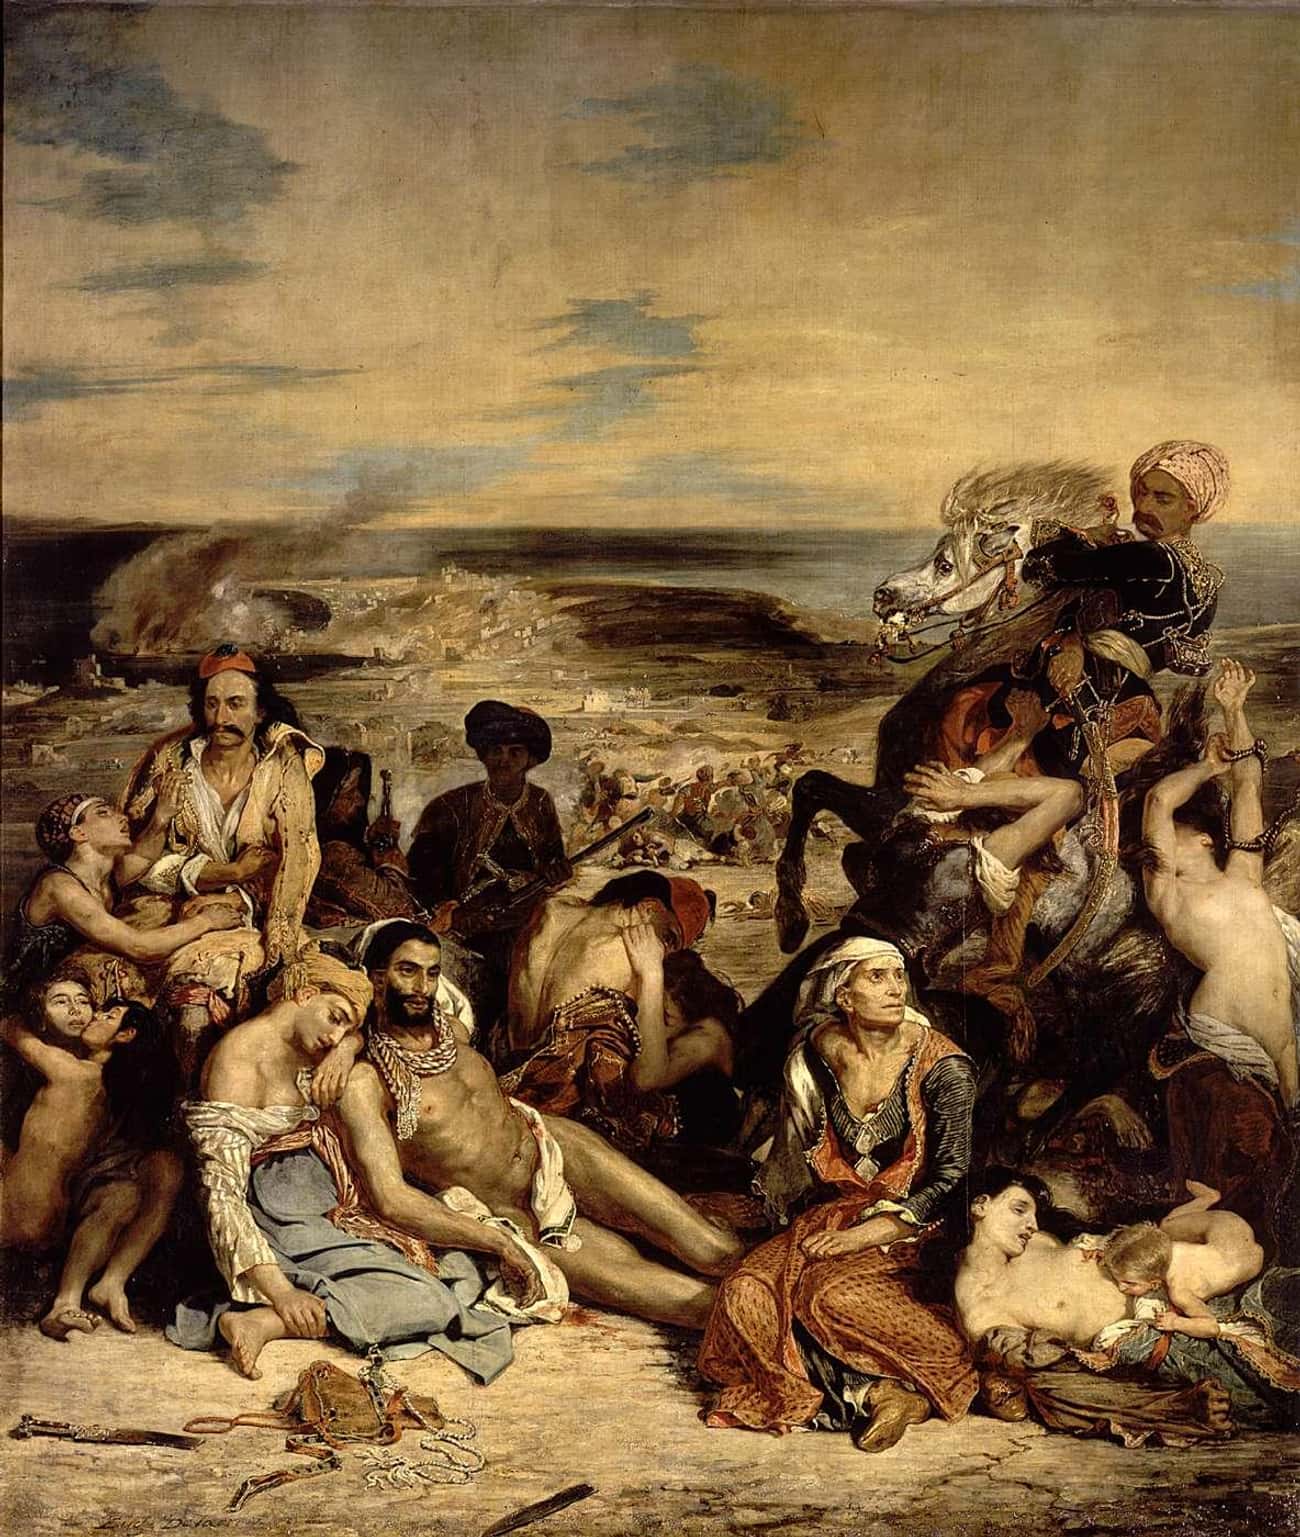 The Massacre at Chios